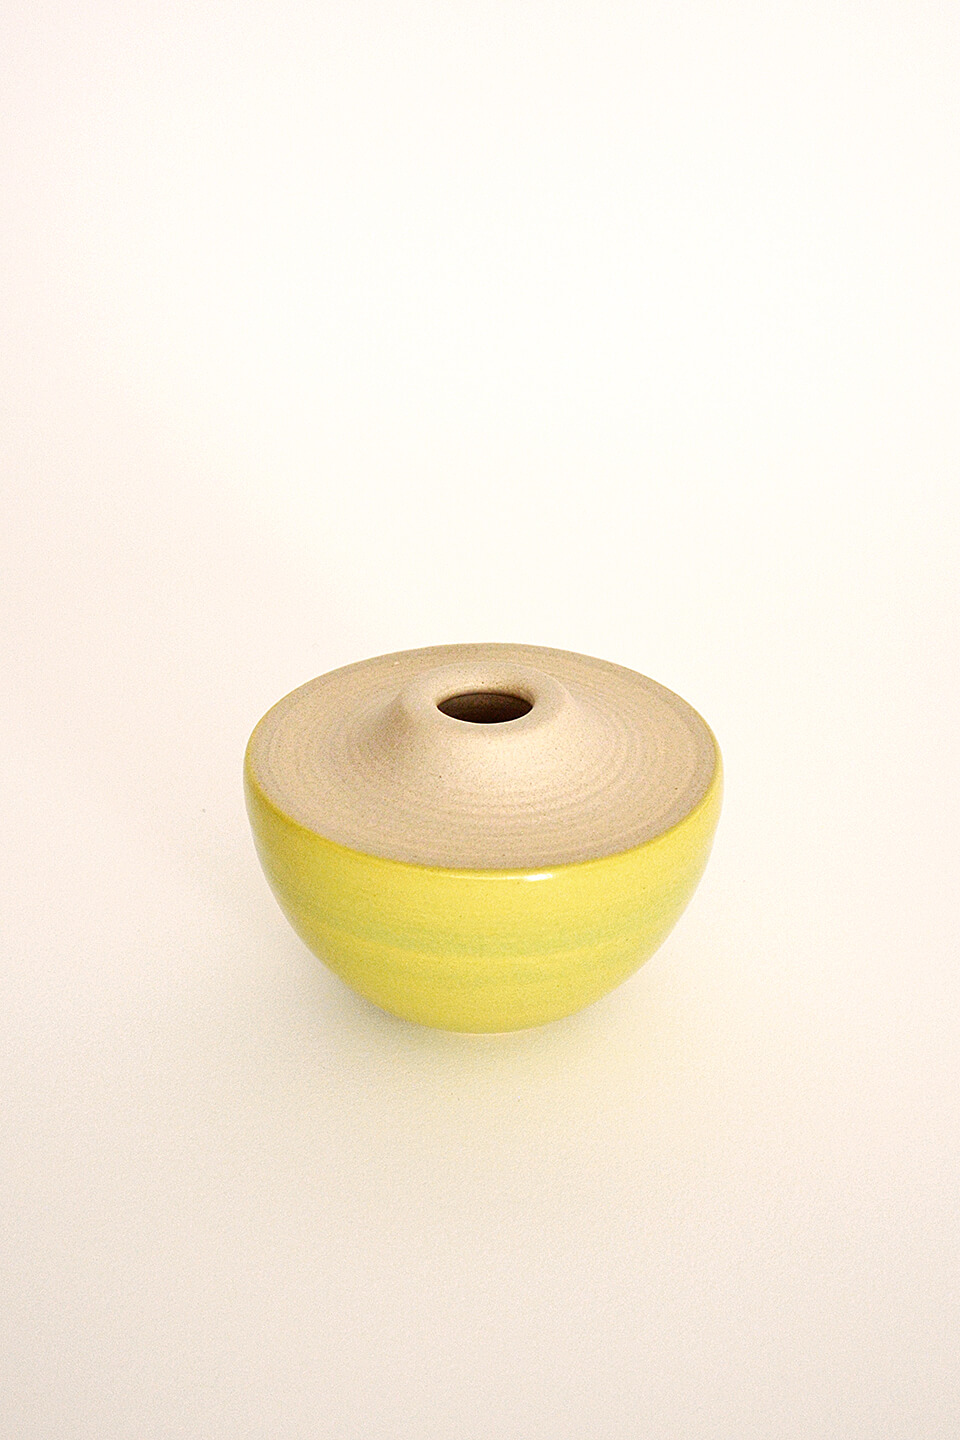 Satin Yellow Green Ceramic Vase No. 642